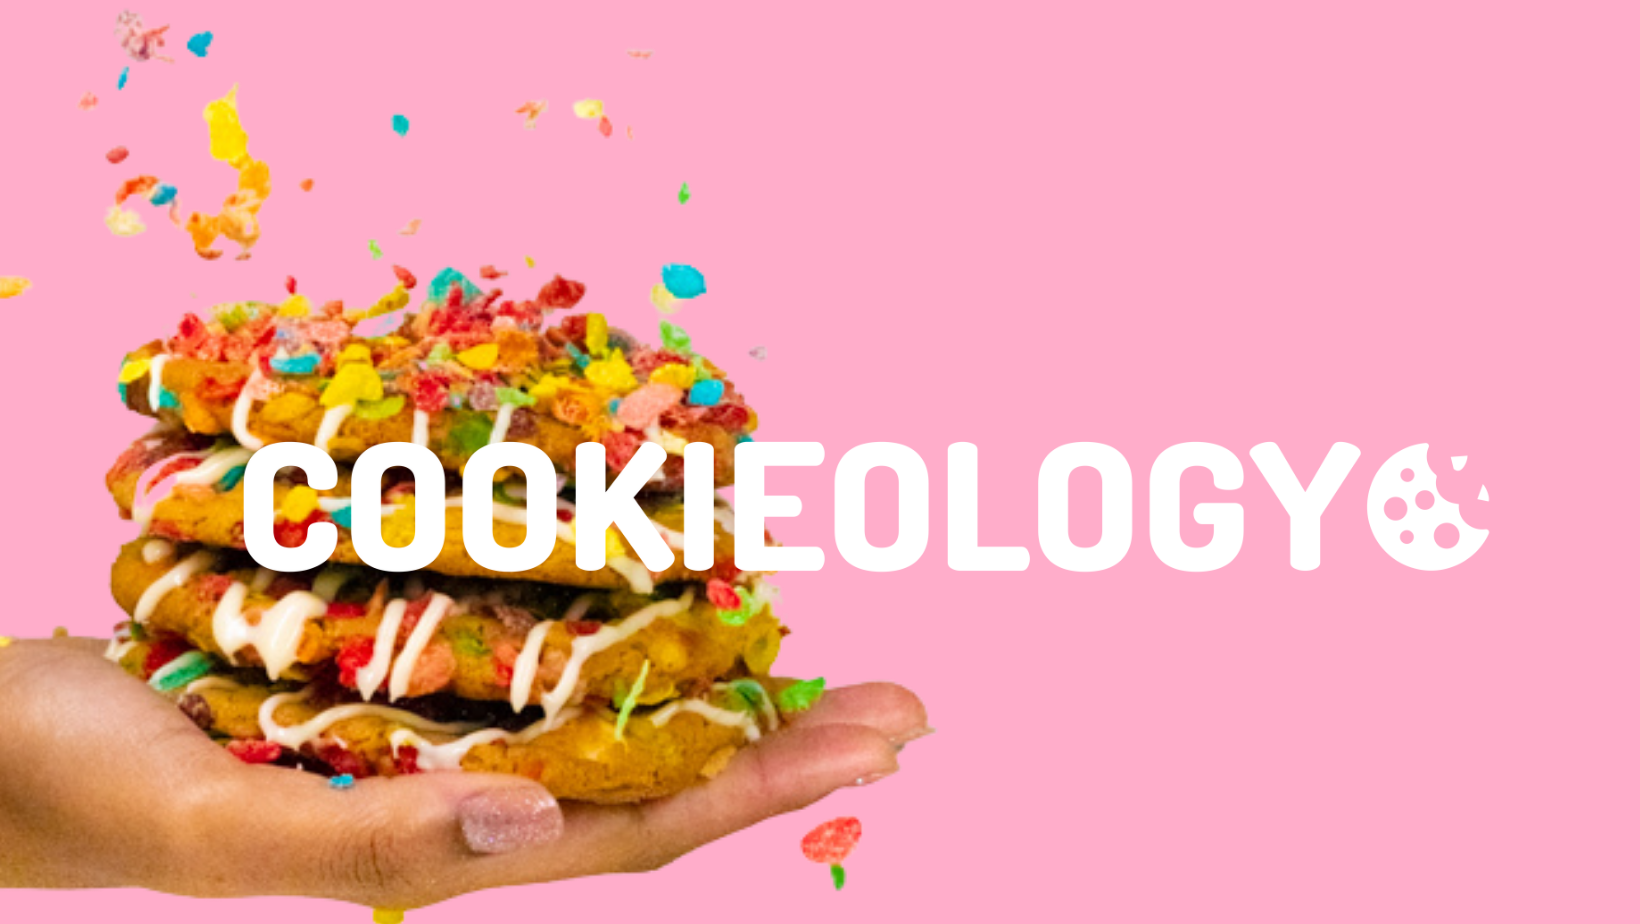 Cookieology